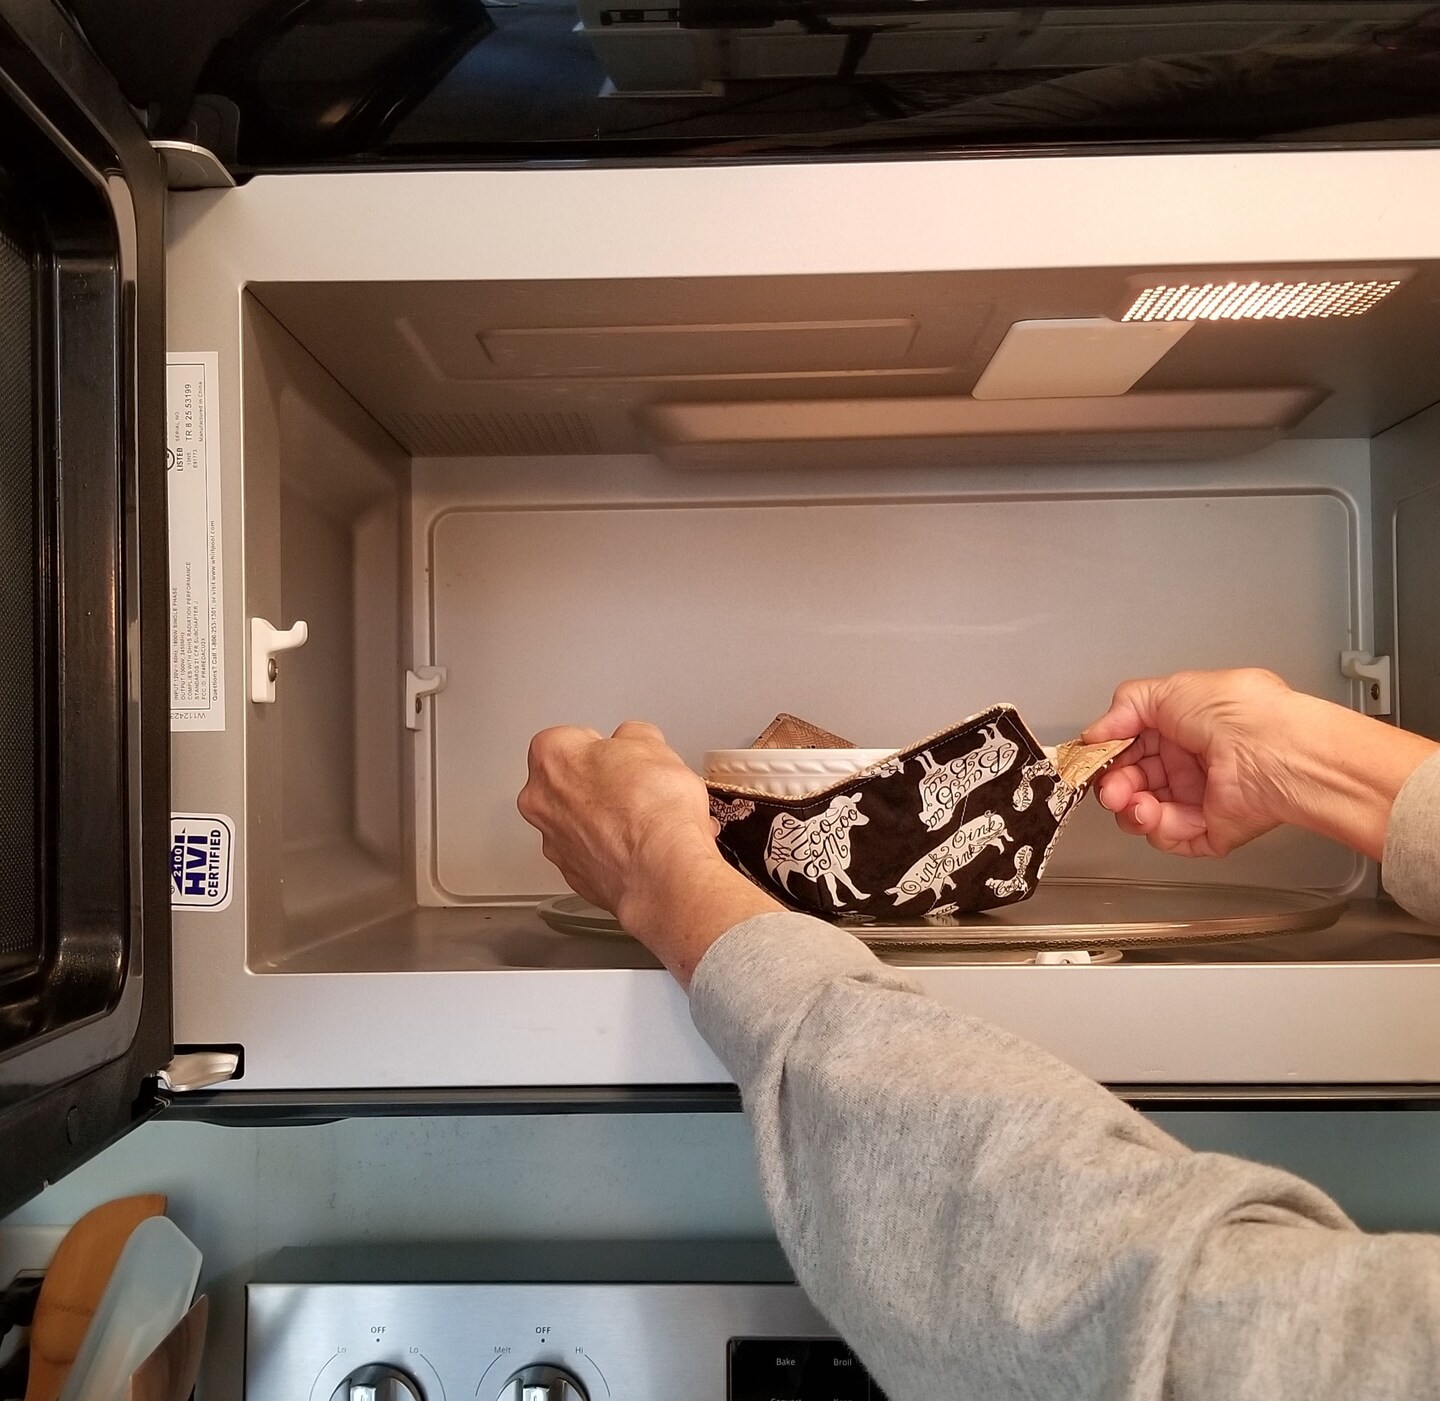 Bowl Cozy Let's Make a Reversible Microwave Safe! - Fun Stuff Crafts